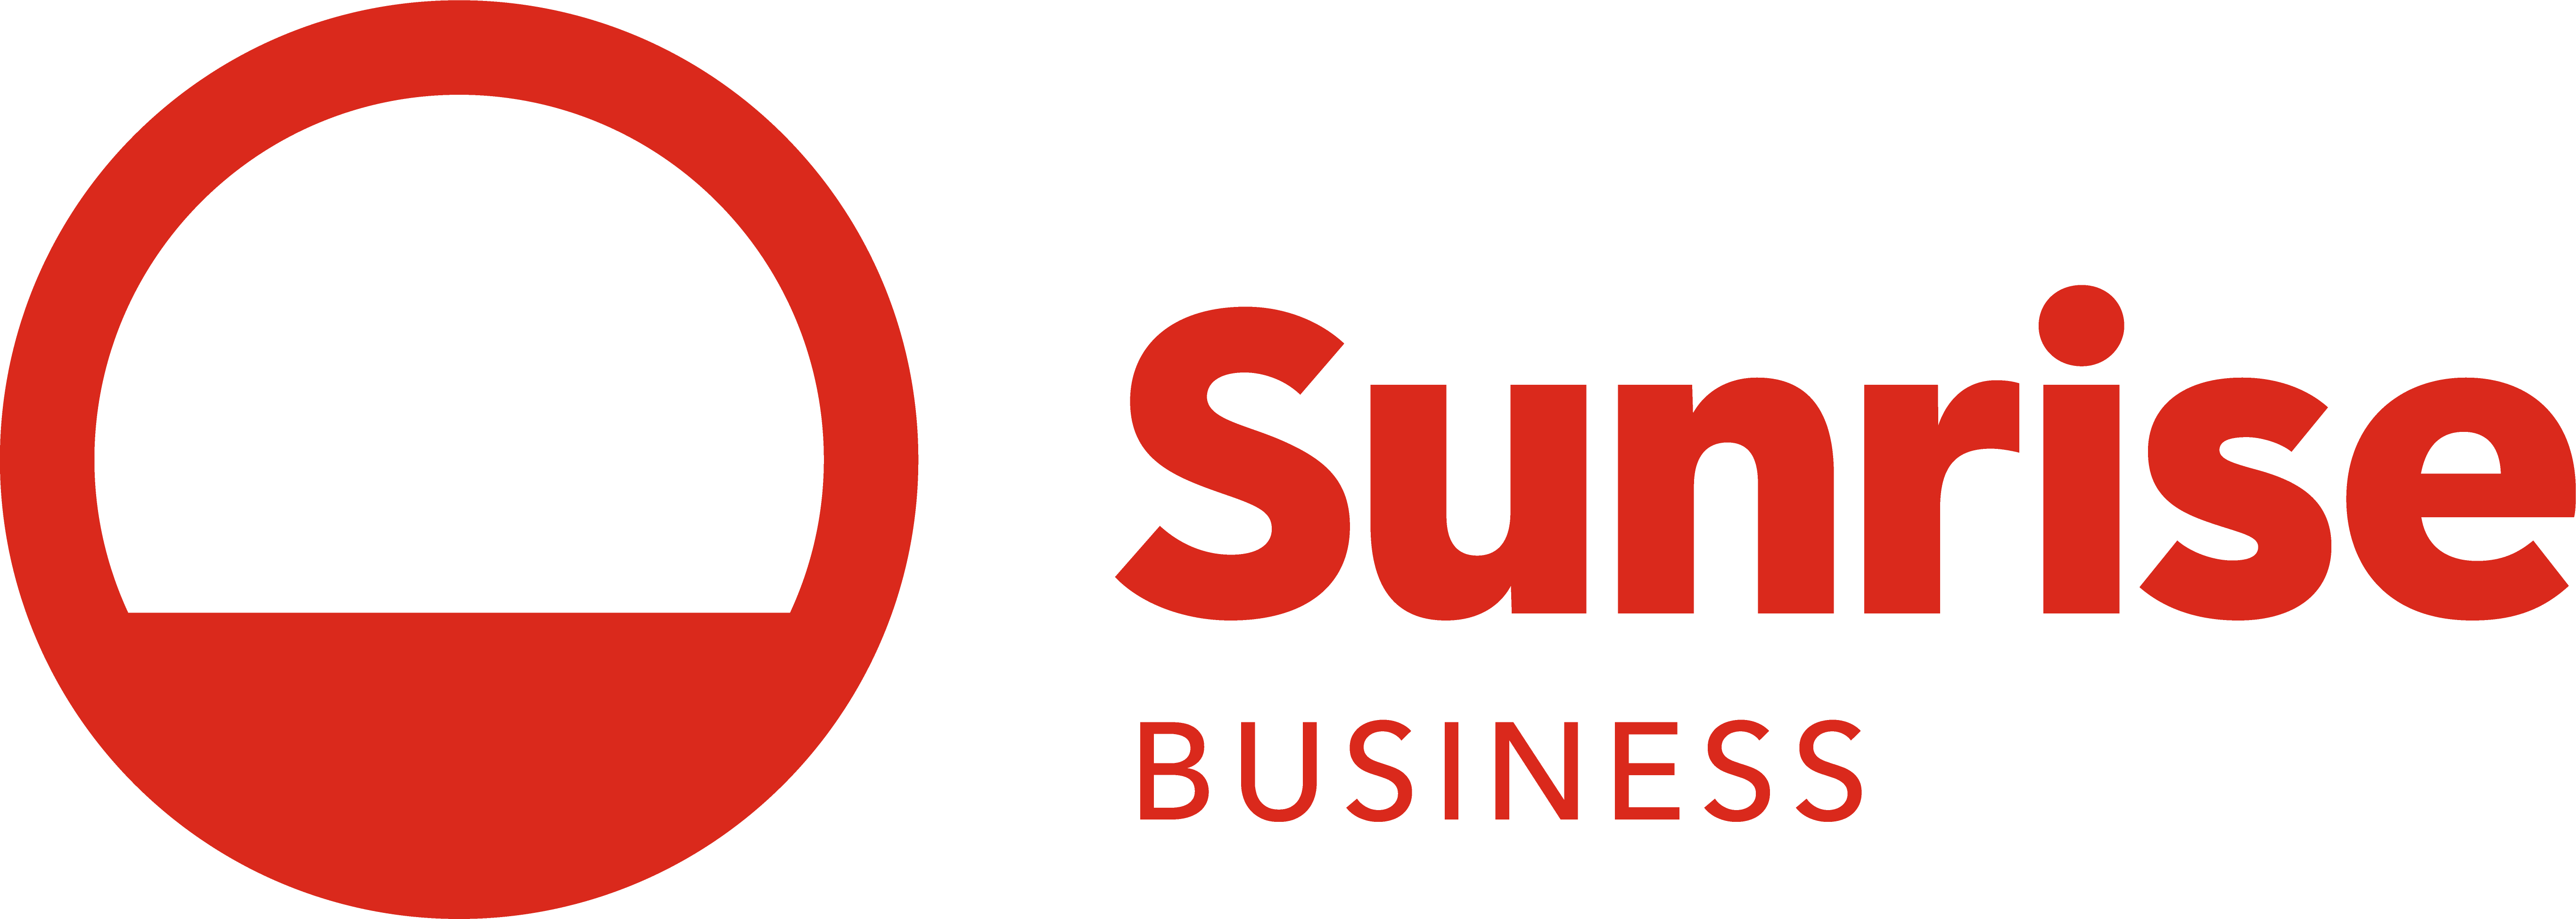 Exklusives Sunrise Business Angebot für Mobile